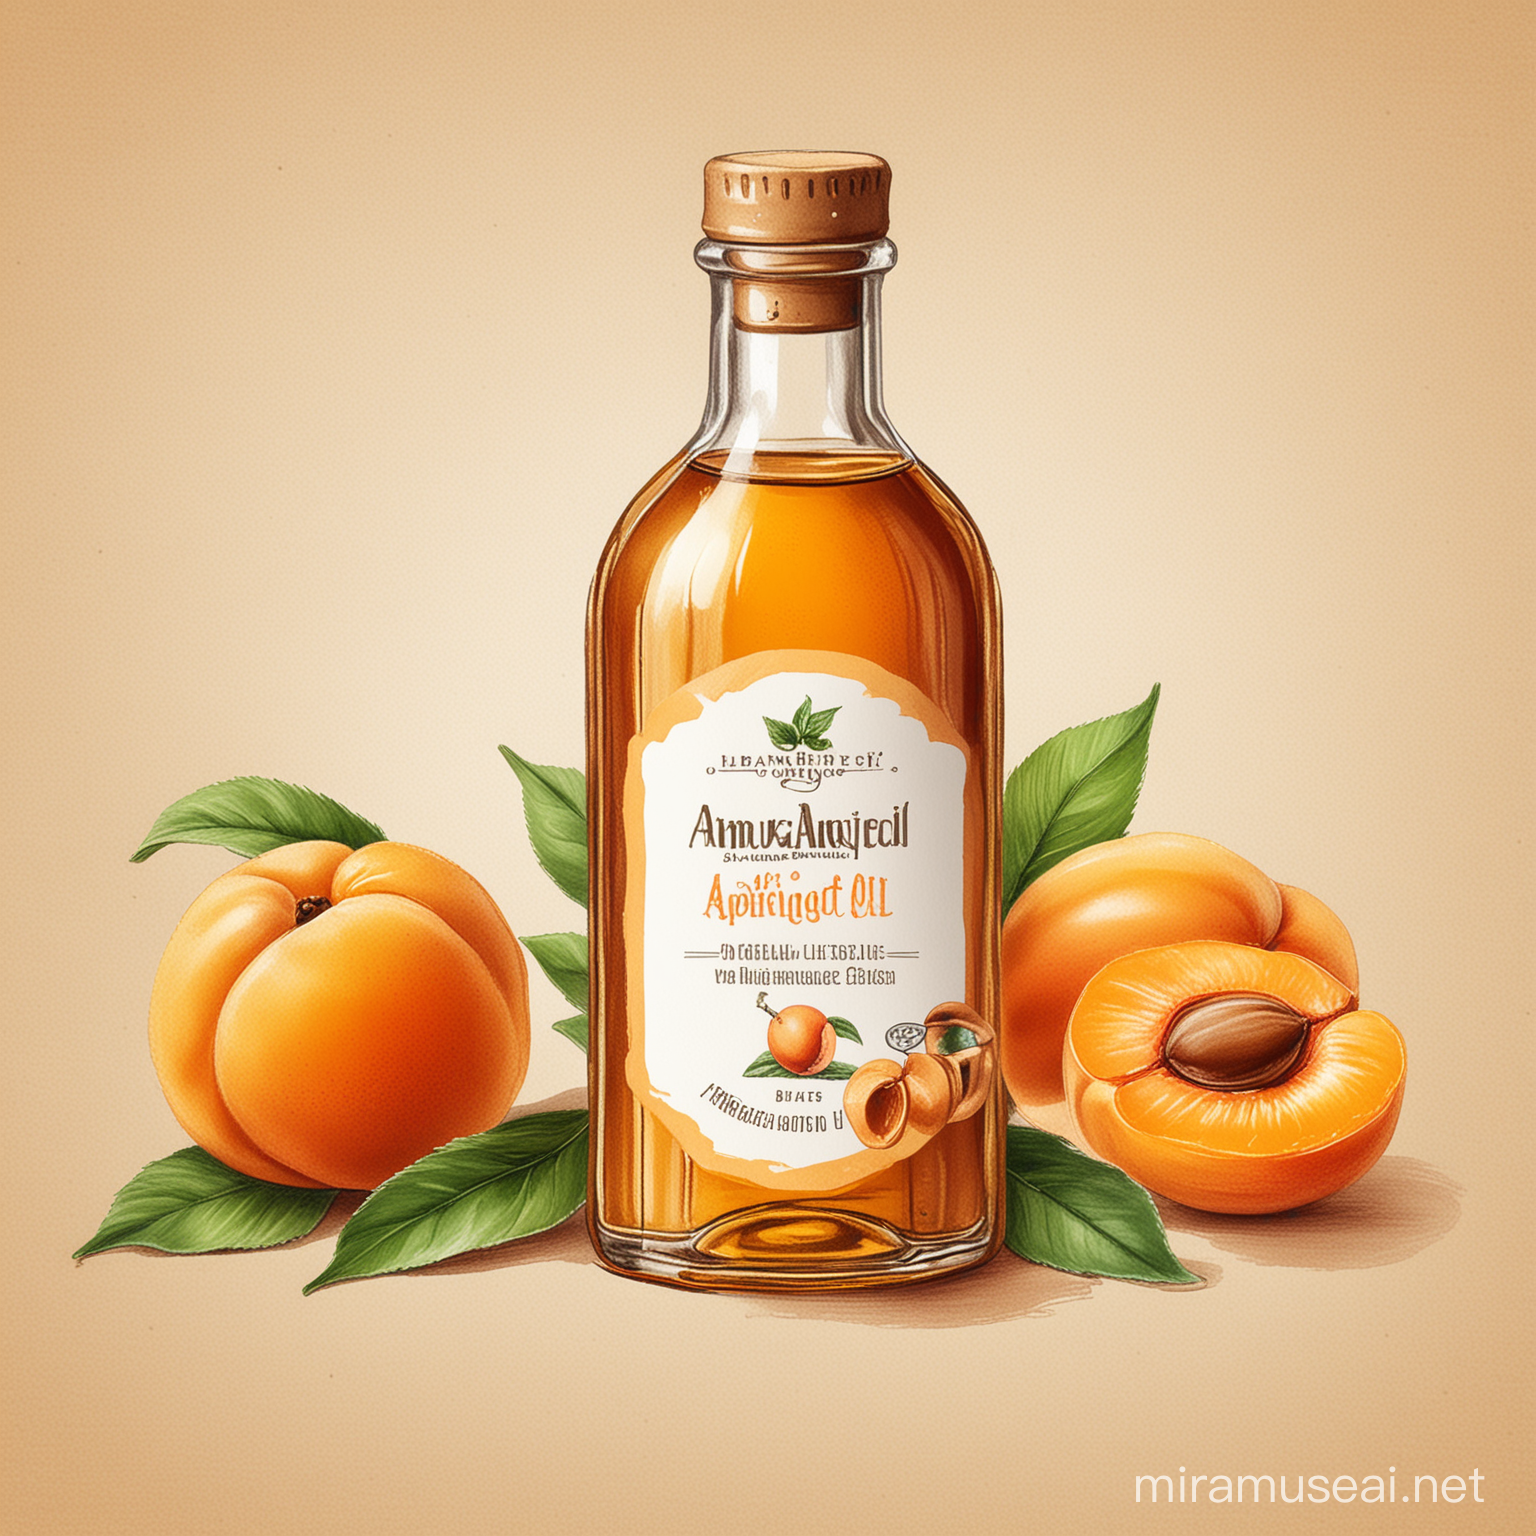 Illustration Sketch of Natural Apricot Oil Bottle Product Label